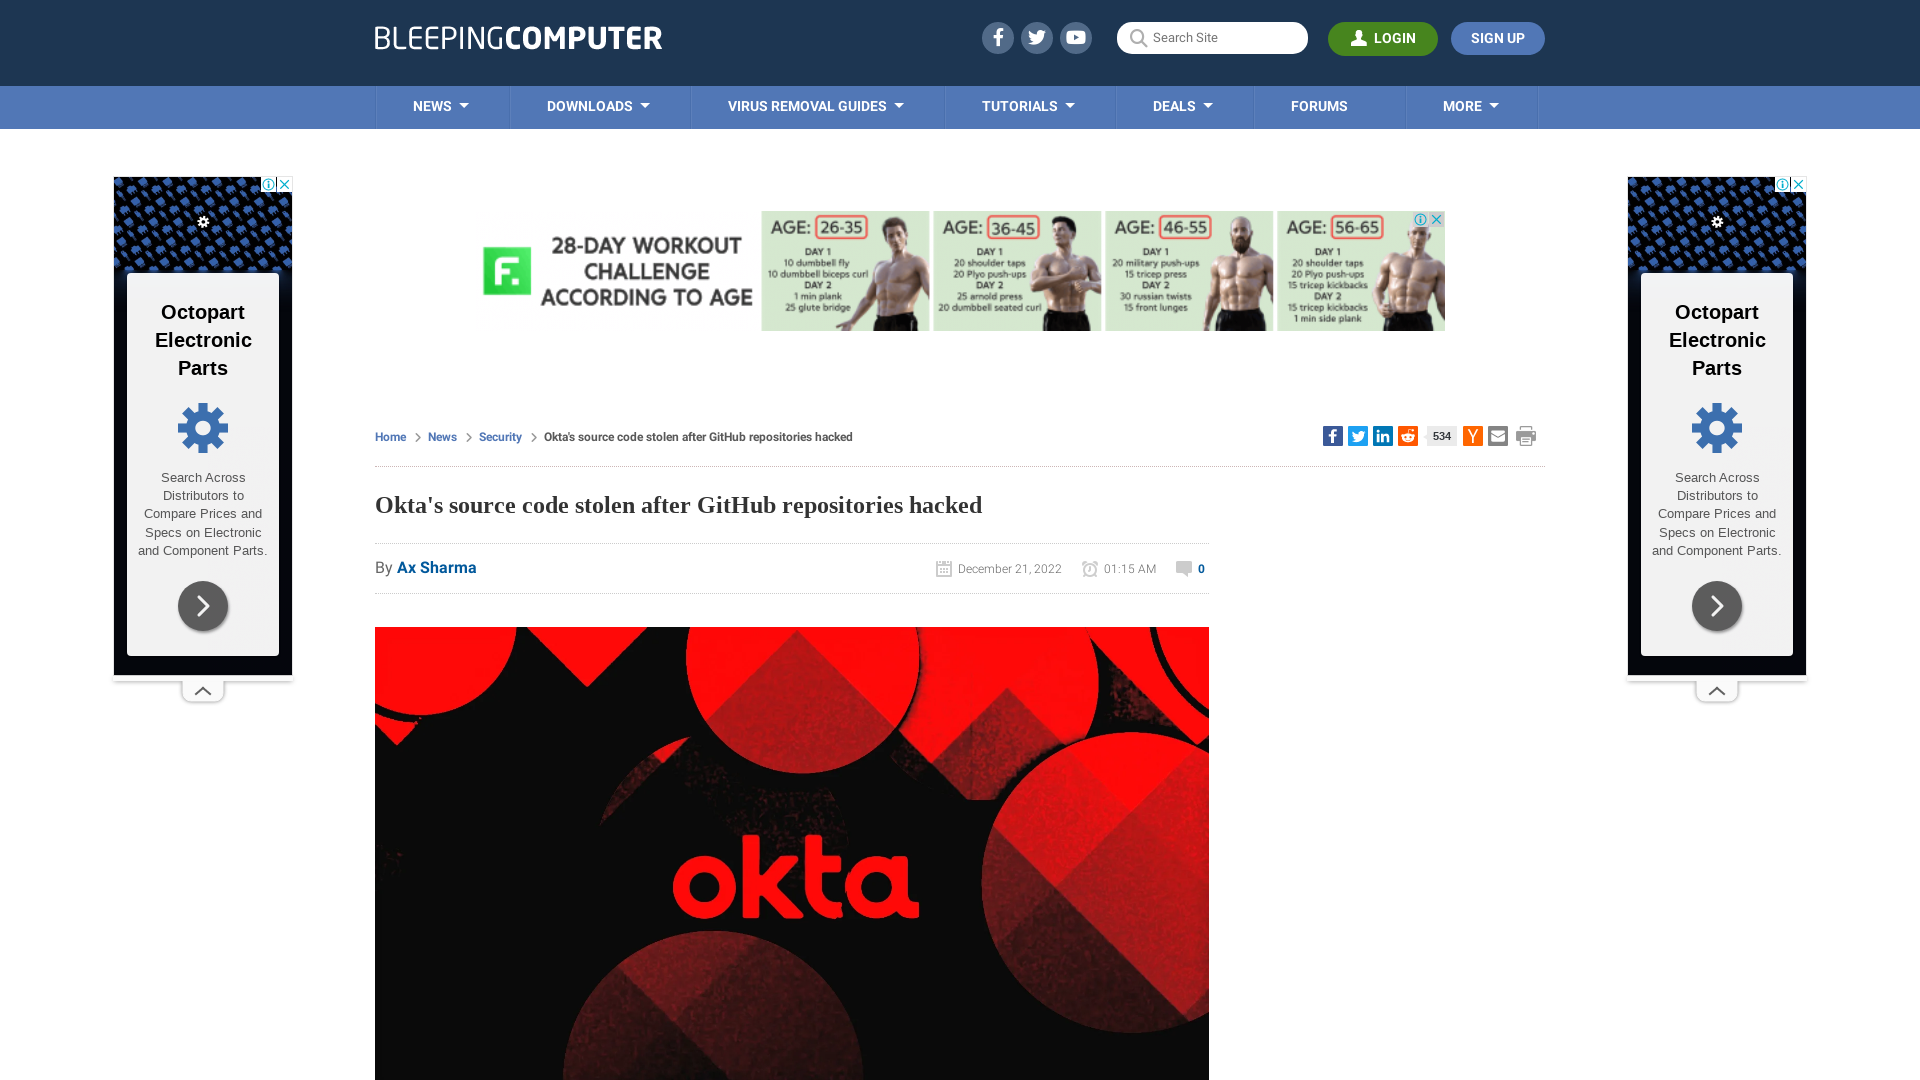 Okta's source code stolen after GitHub repositories hacked